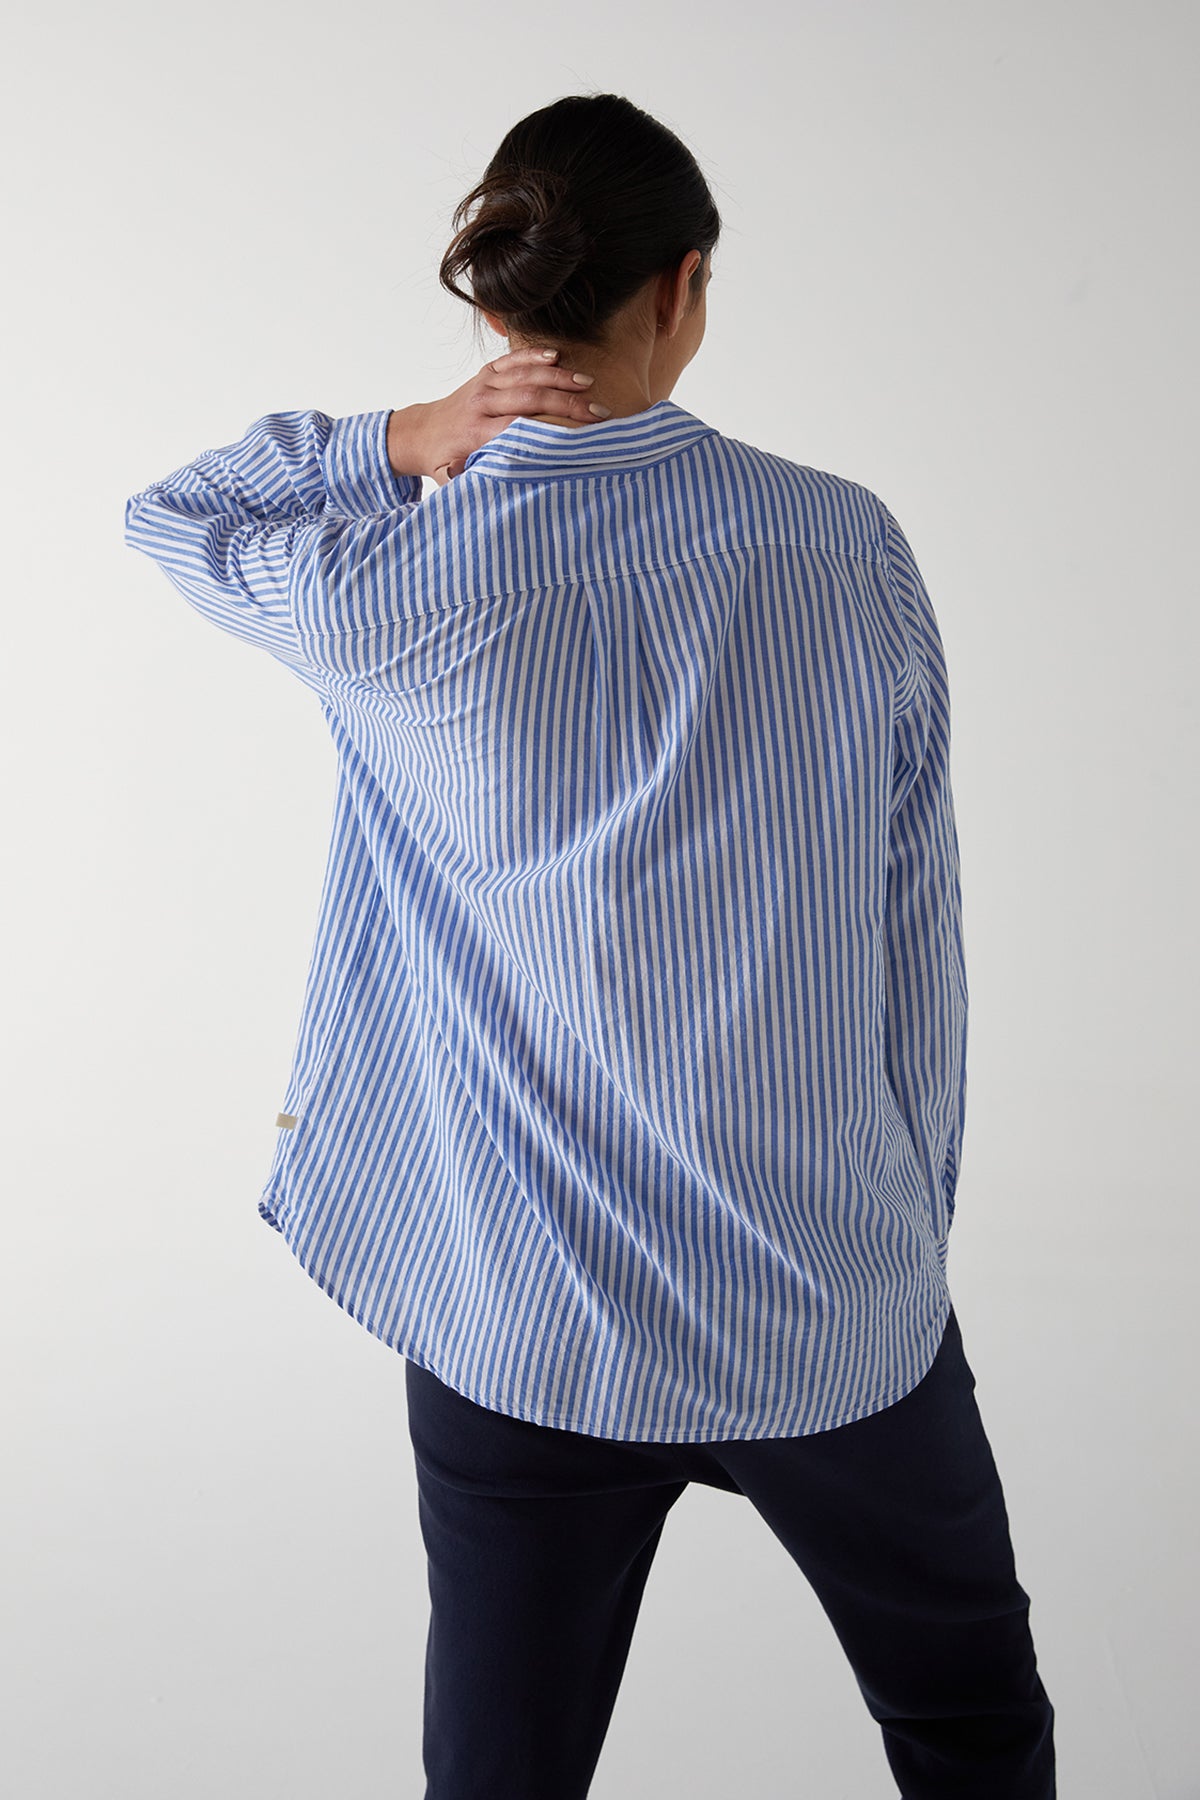 Newport Blue and White Stripe Button Down Cotton Shirt Back-25154865332417